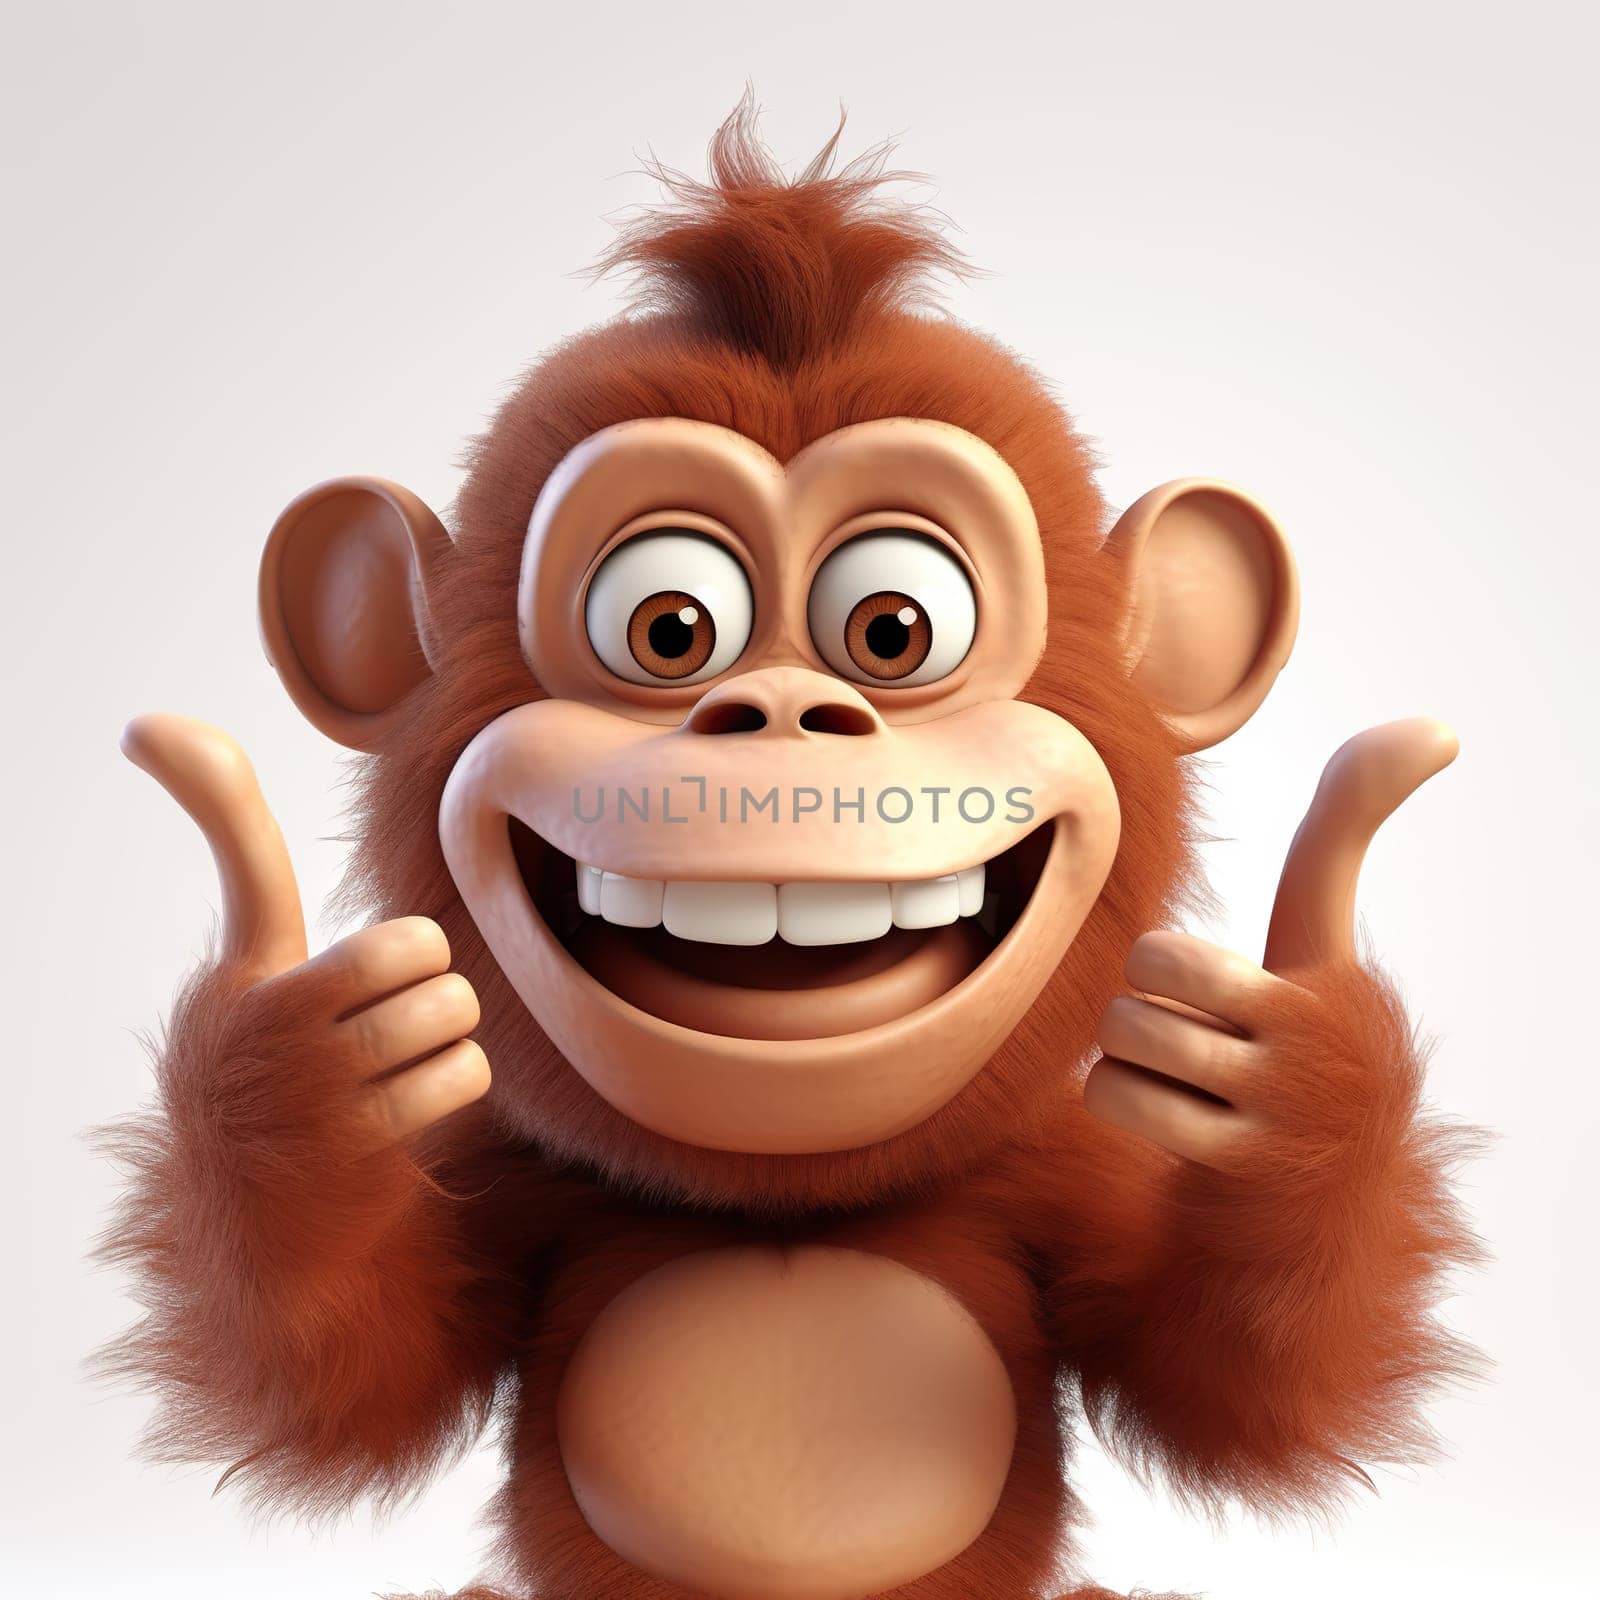 Cheerful Cartoon Monkey Giving Thumbs Up by chrisroll